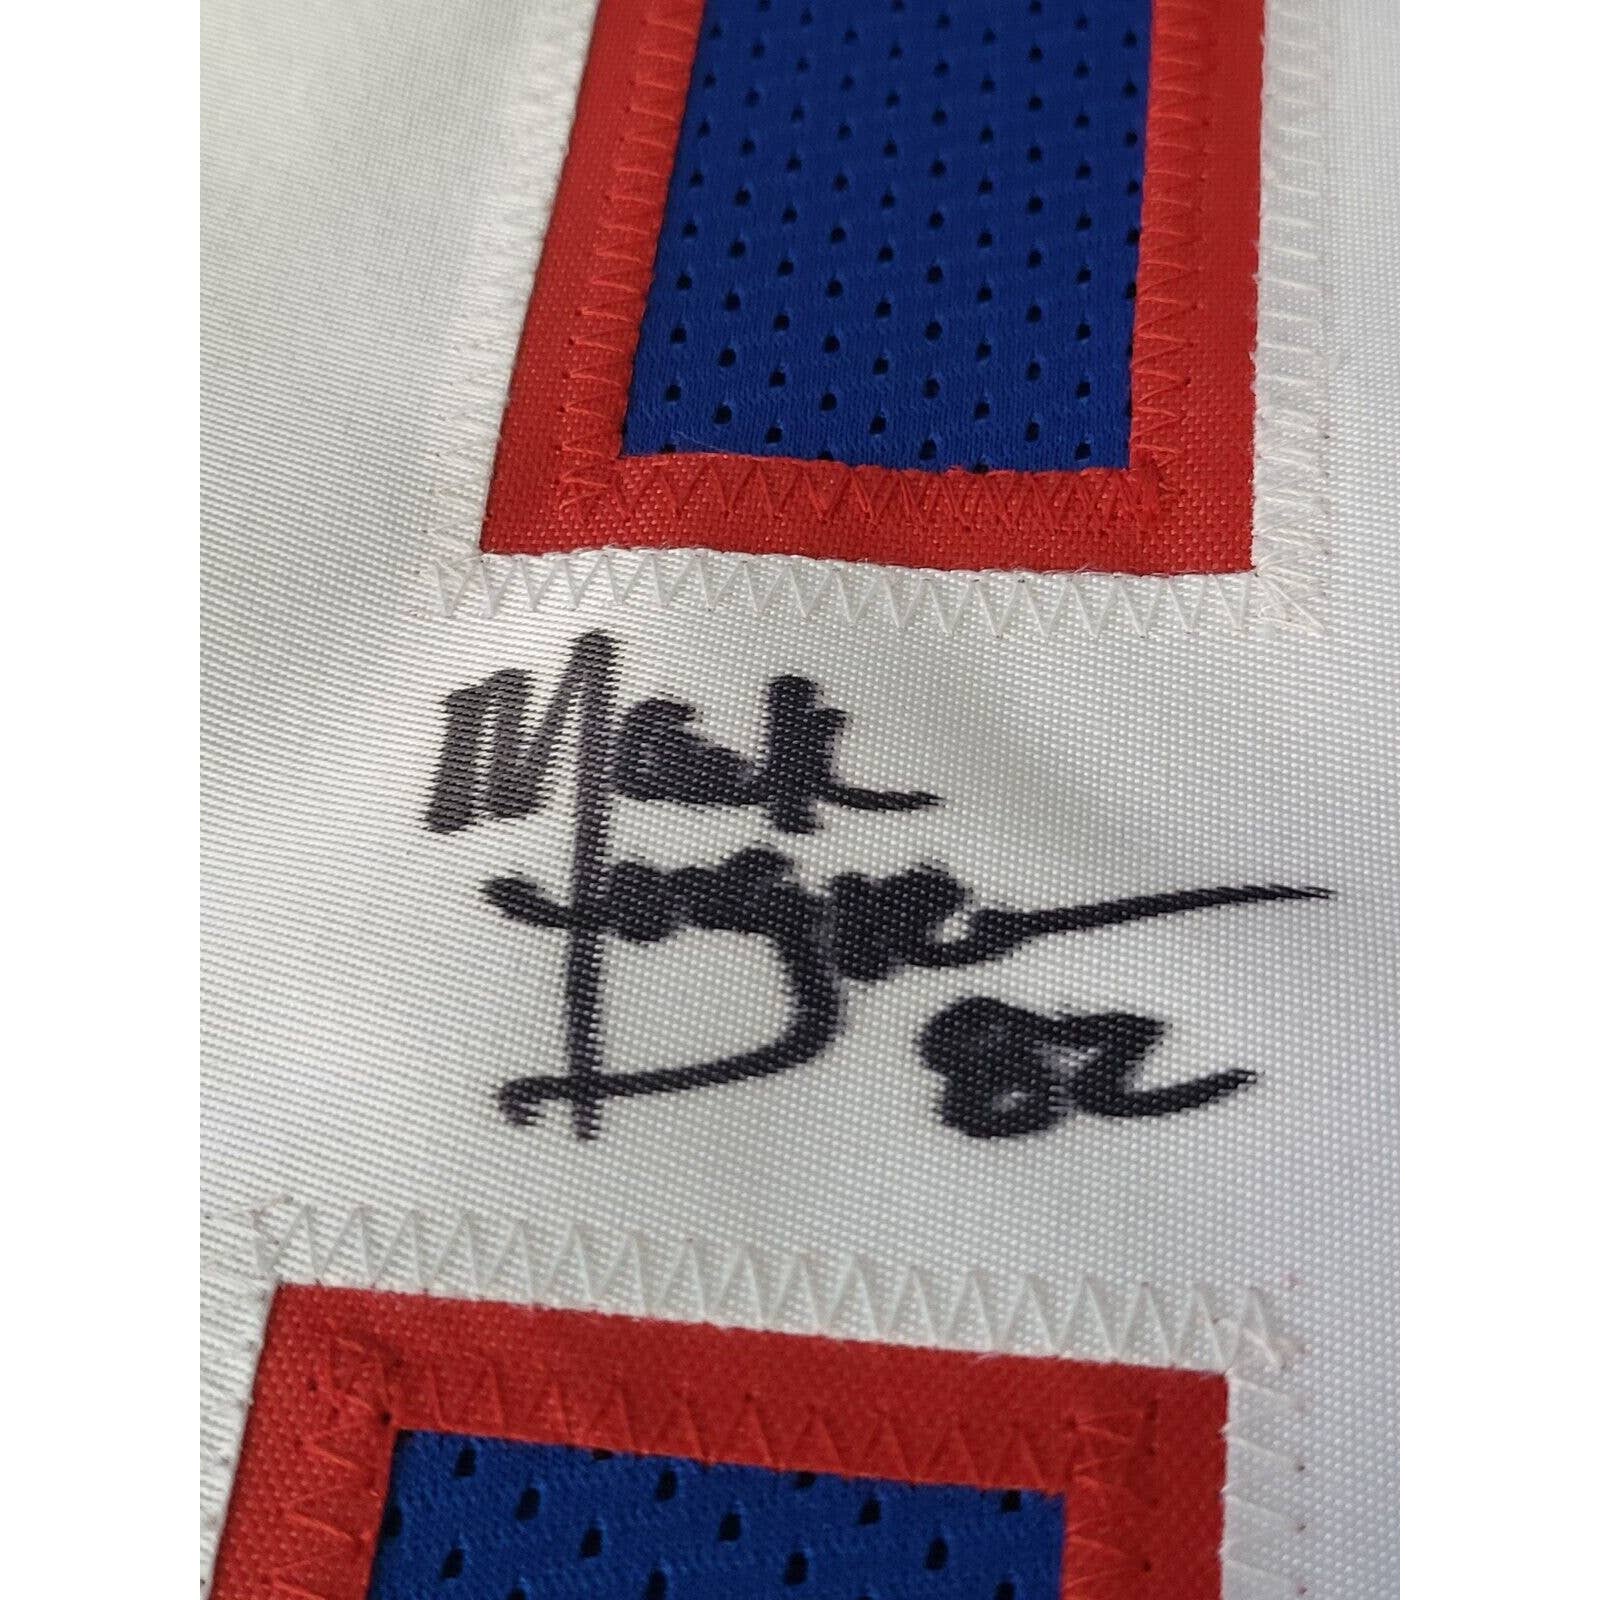 Mark Ingram Autographed/Signed Jersey Beckett COA New York Giants - TreasuresEvolved